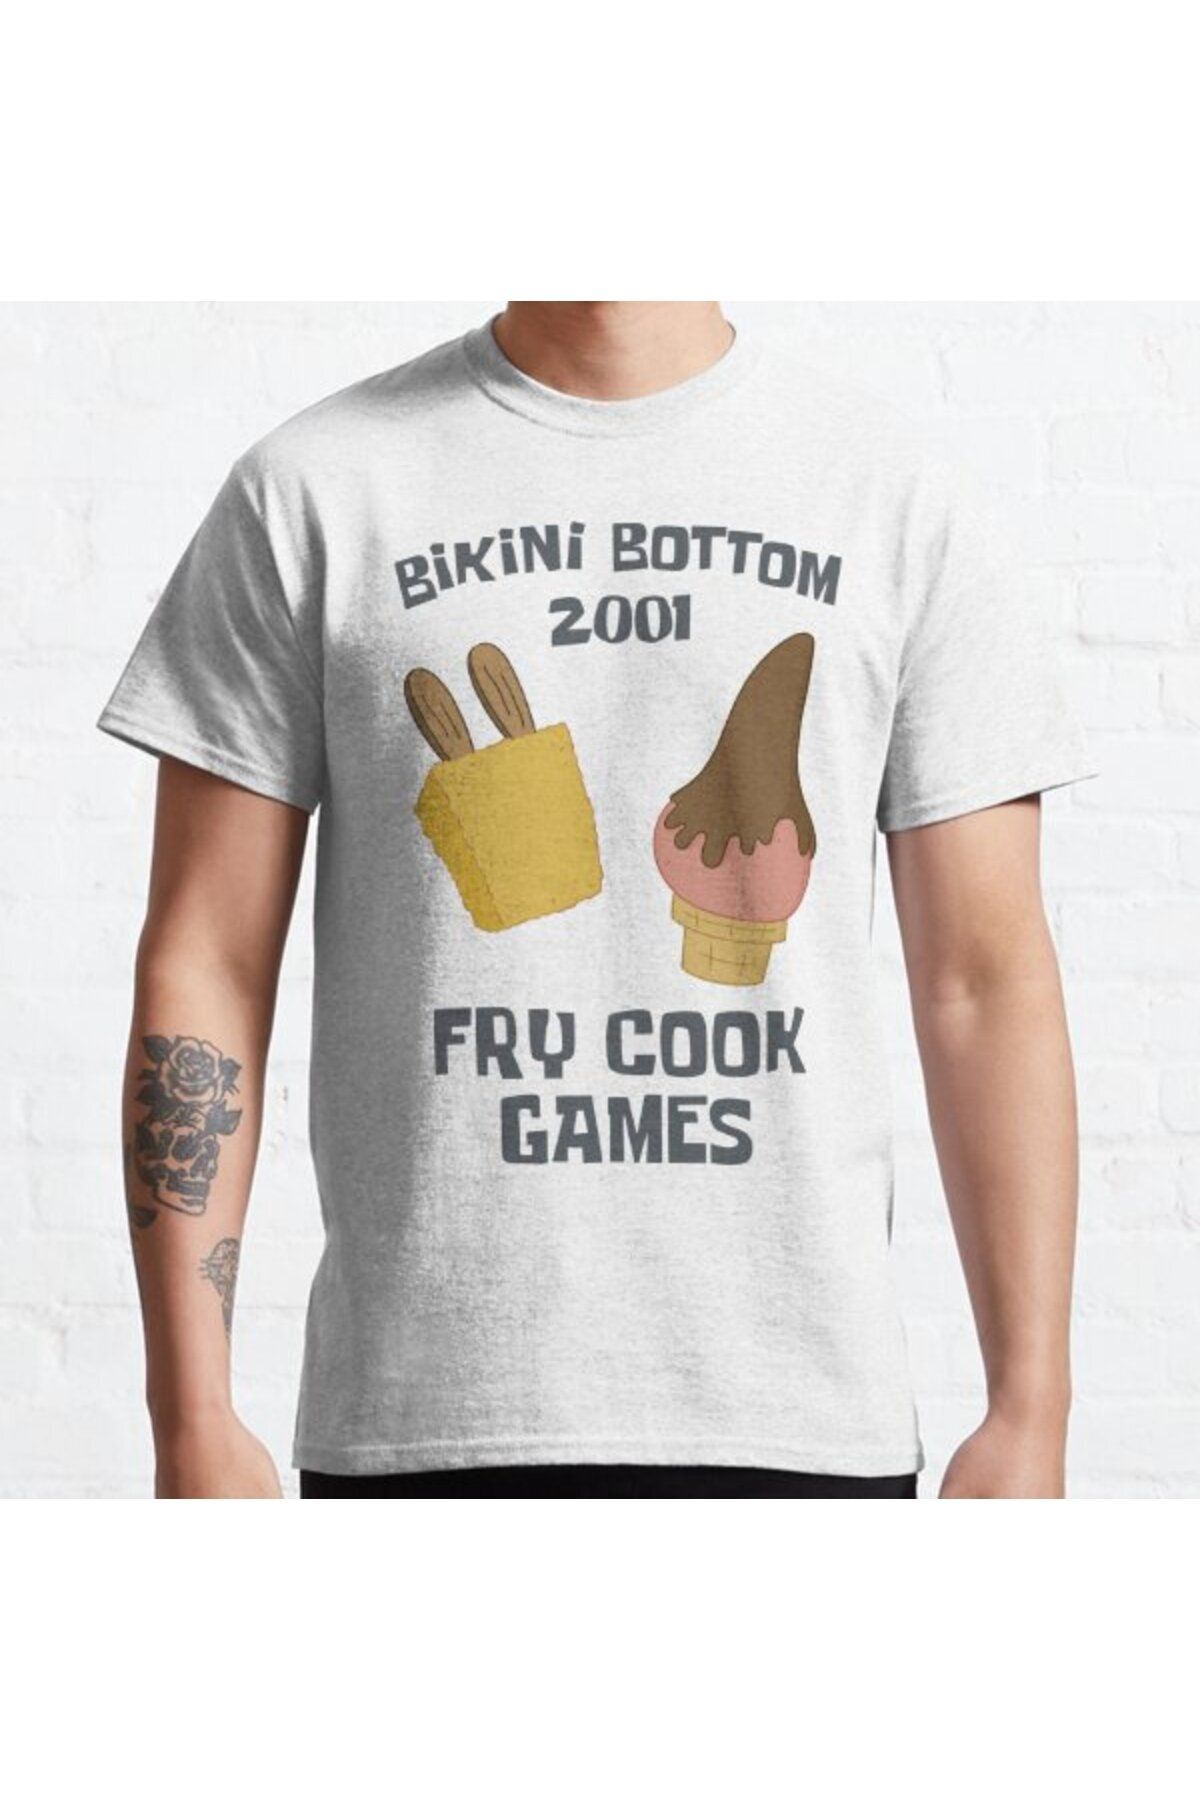 ZOKAWEAR Bol Kalıp Unisex Spongebob Squarepants Bikini Bottom 2001 Fry Cook Games Tasarım Baskılı Tshirt